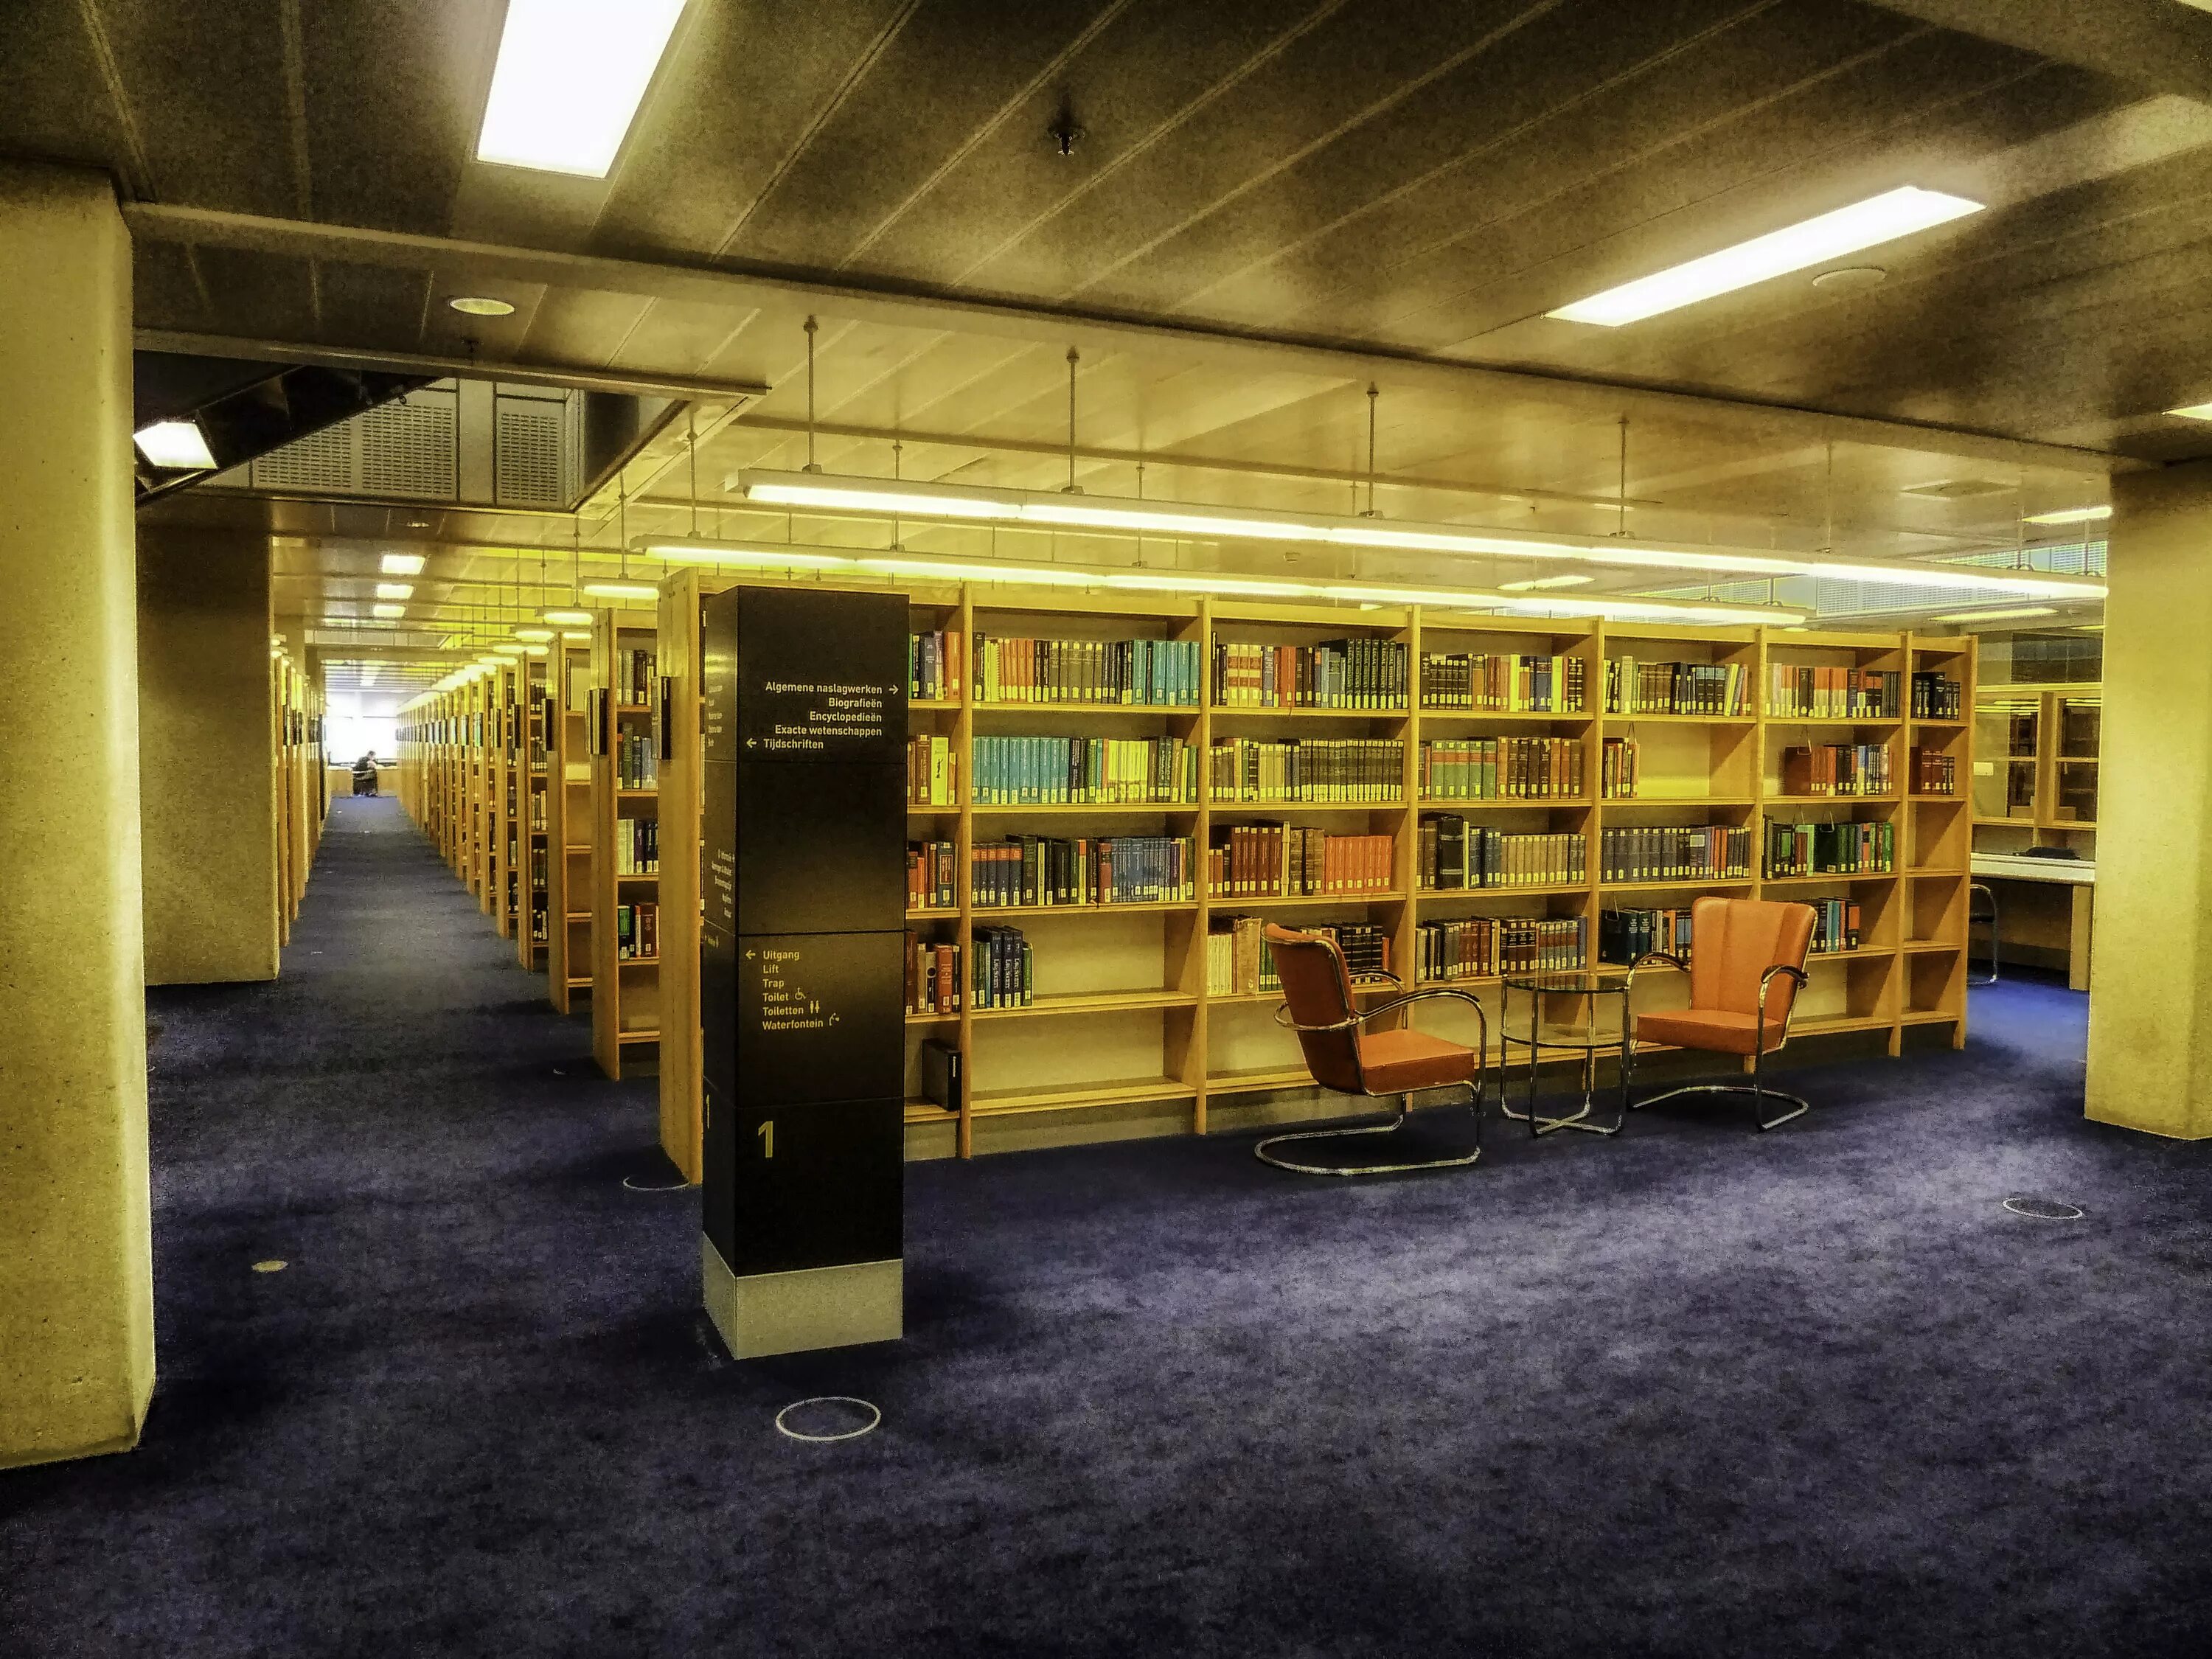 Регистр библиотеки. Библиотека. Библиотека внутри. Библиотечные полки. Библиотека изнутри.